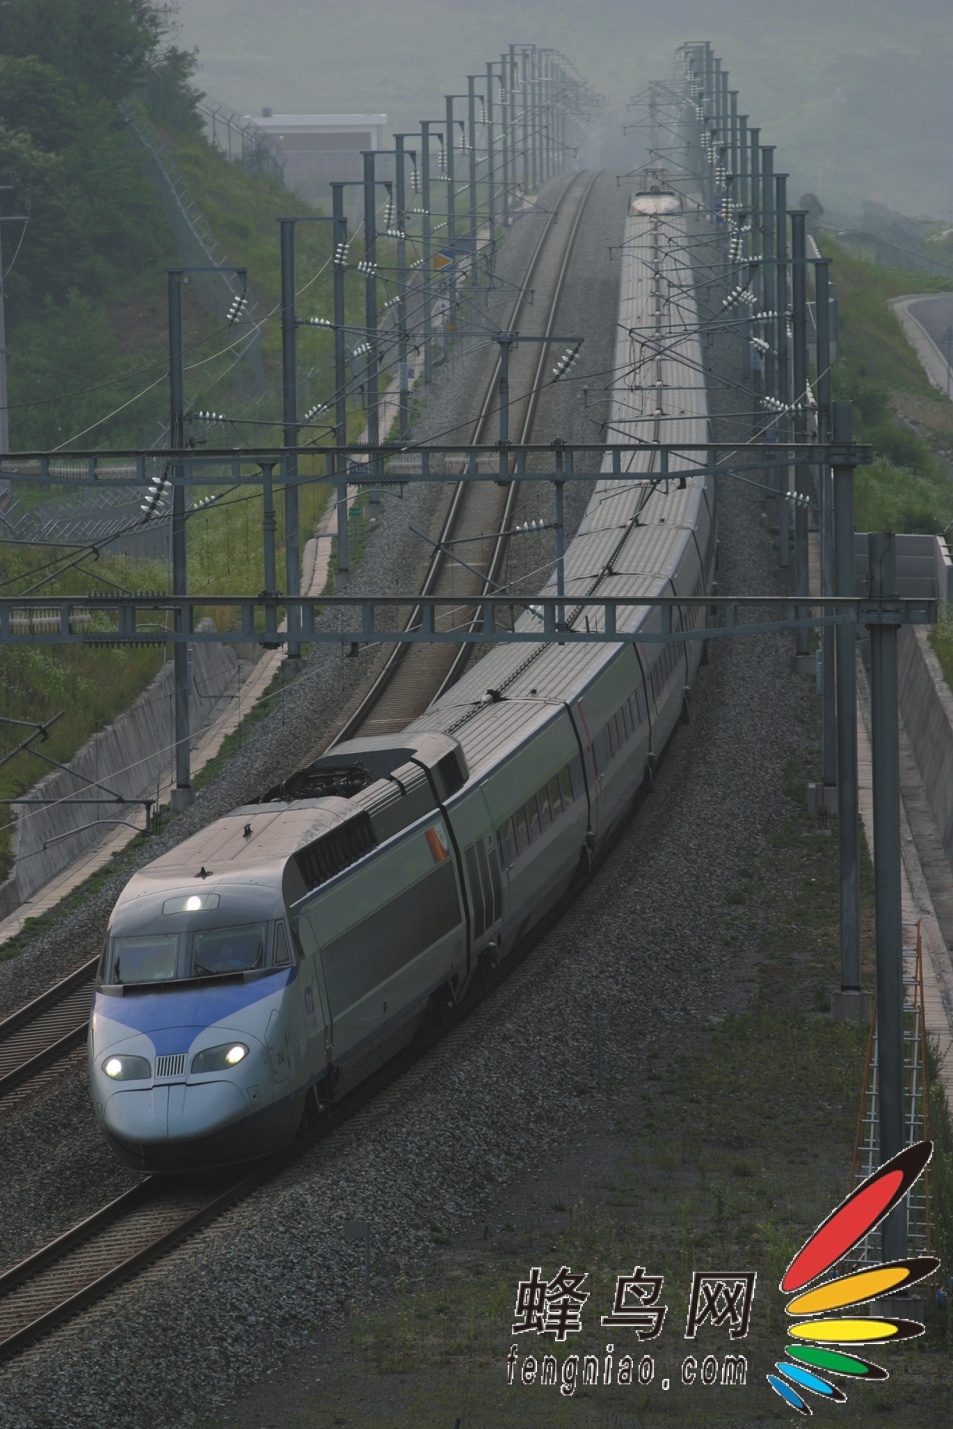 ktx101号列车图片